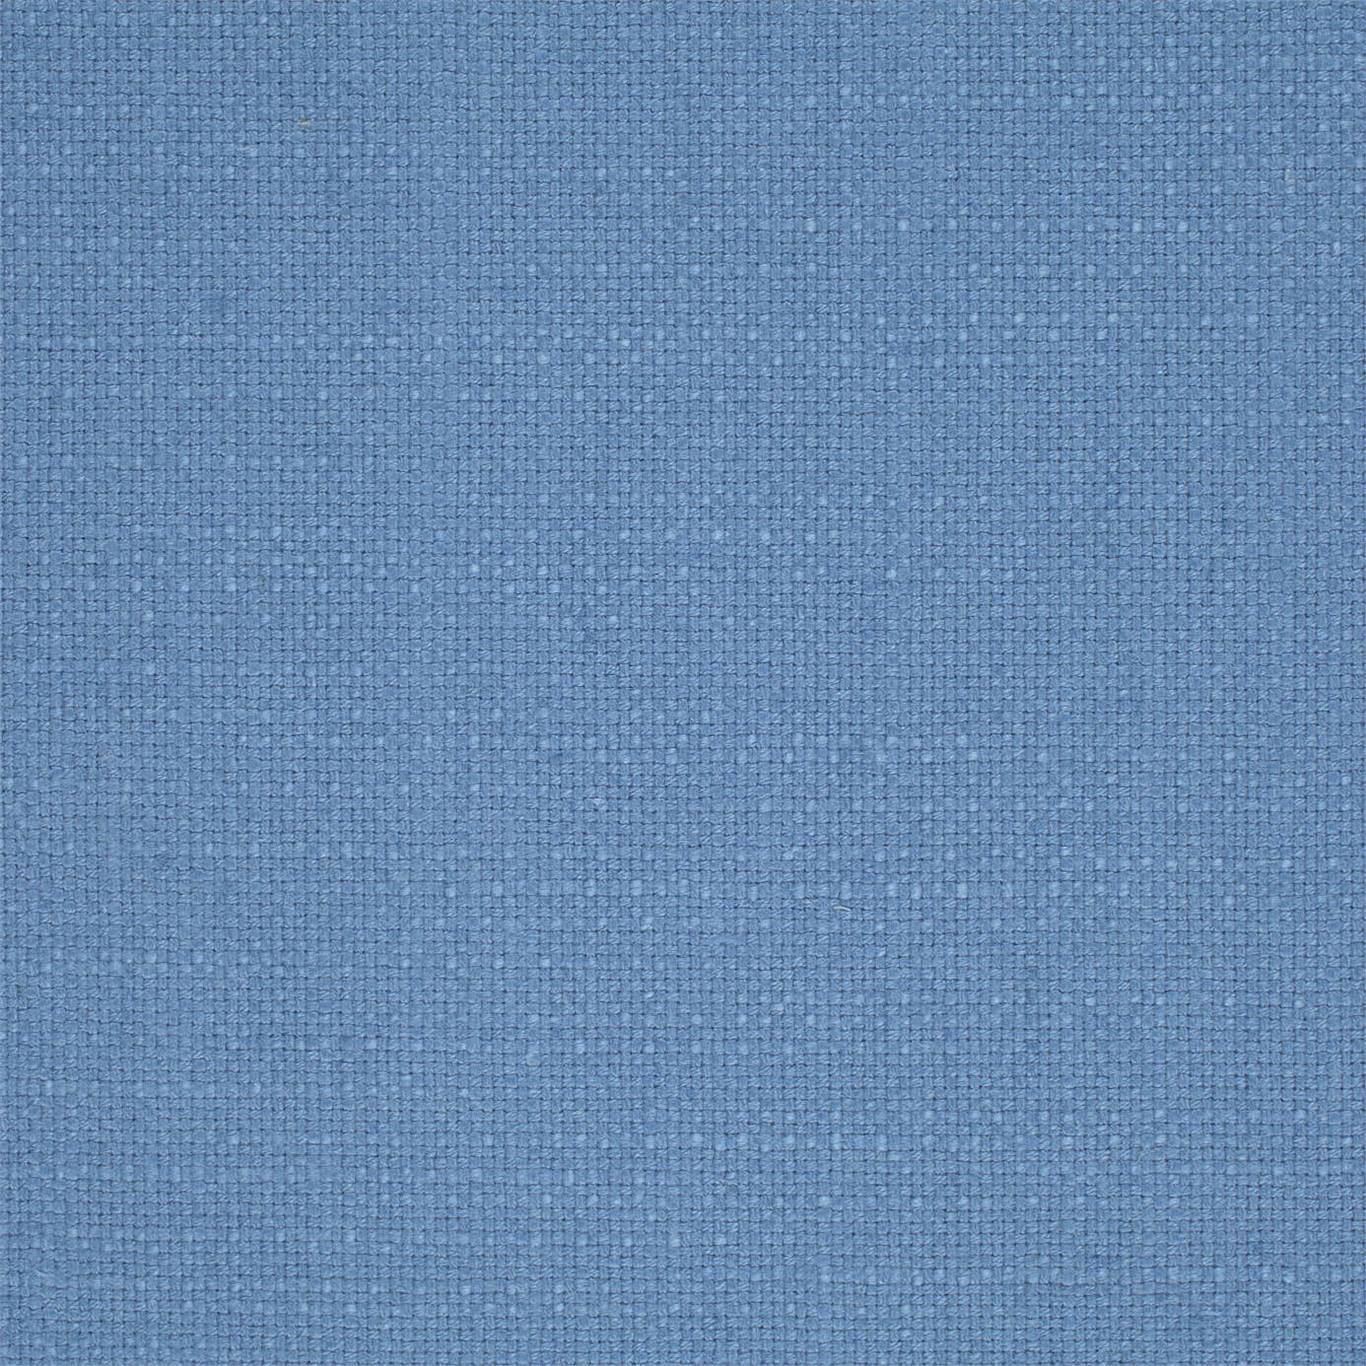 Tuscany Ii Cornflower Blue Fabric by SAN